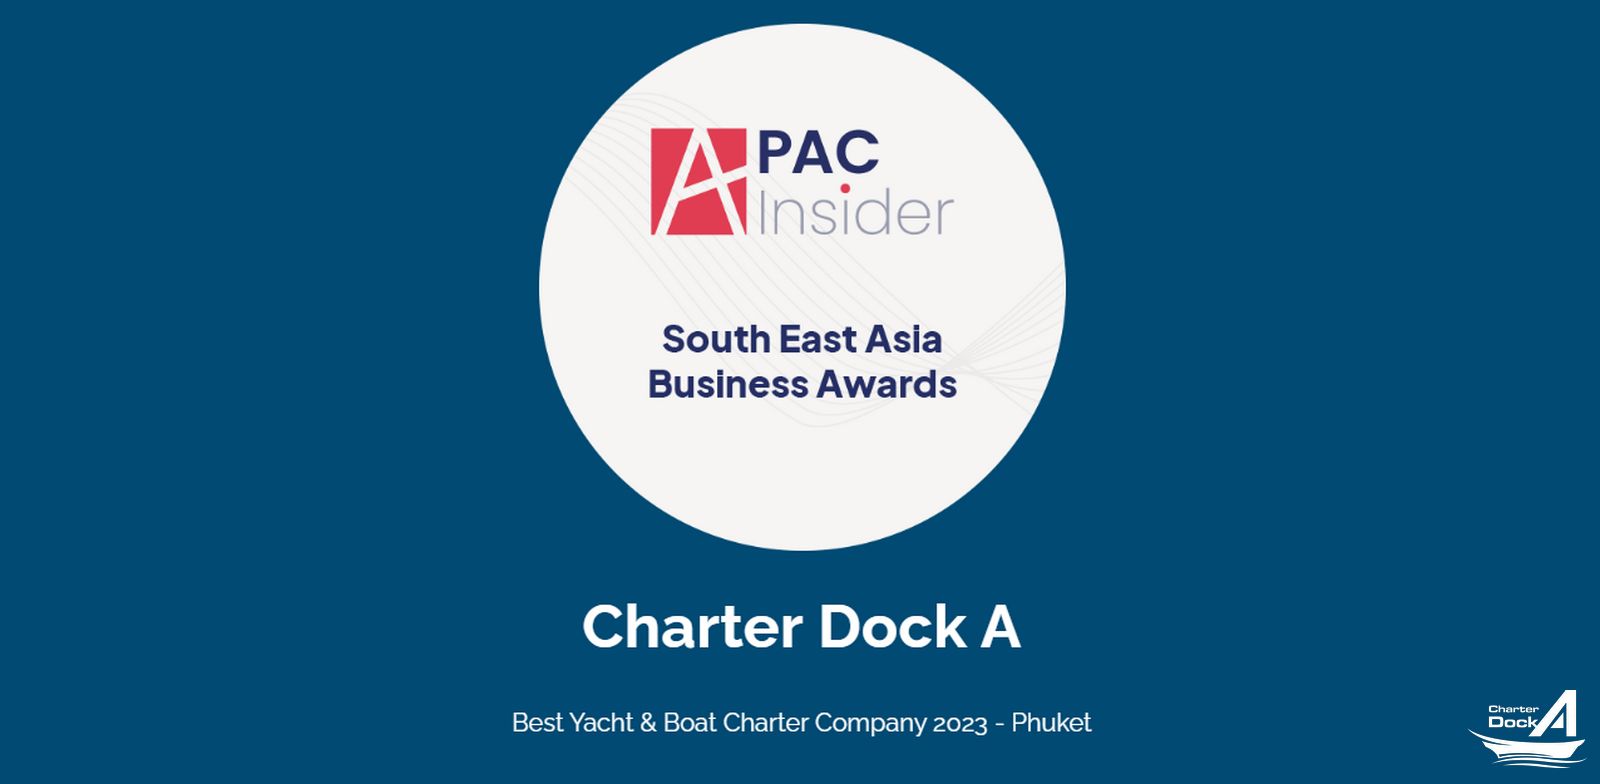 Best Yacht & Boat Charter Company 2023